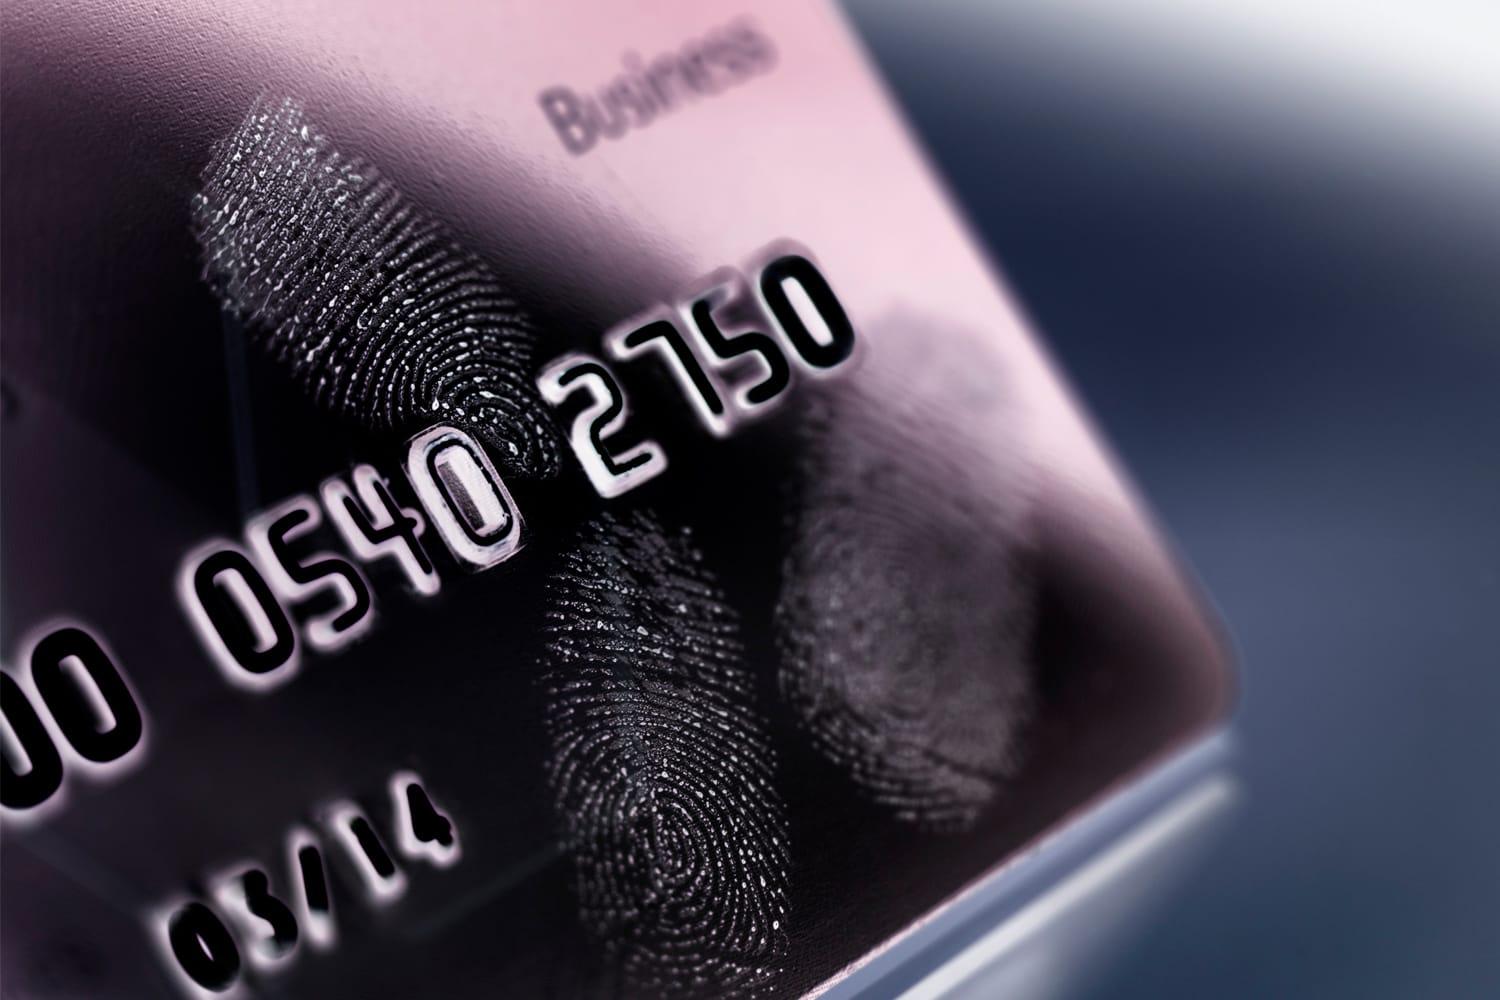 Credit card fraud conceptual image  